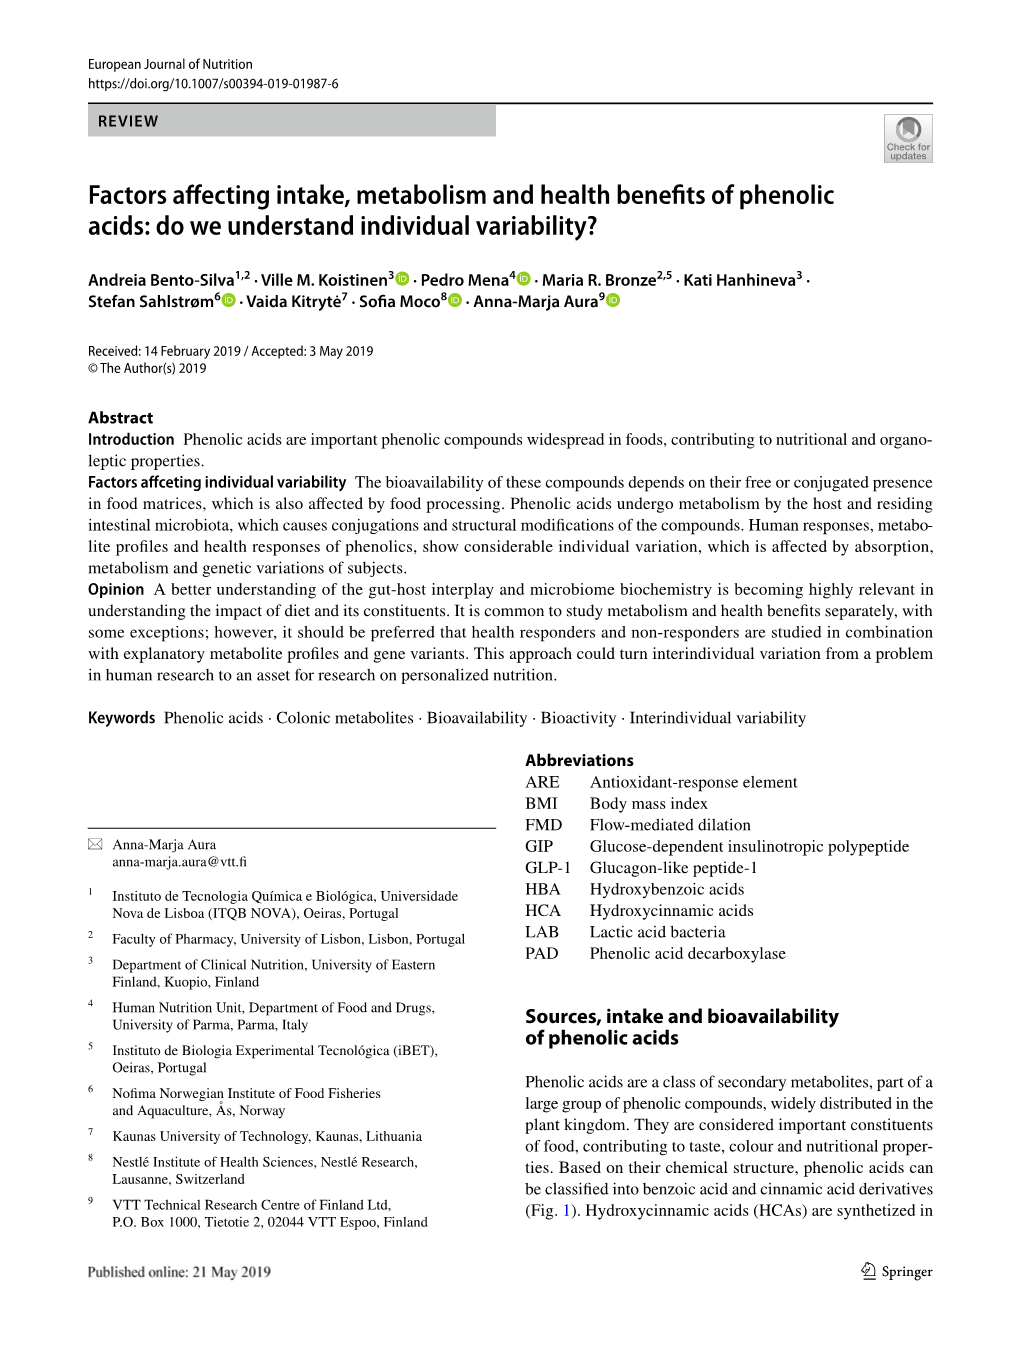 Factors Affecting Intake, Metabolism and Health Benefits of Phenolic Acids